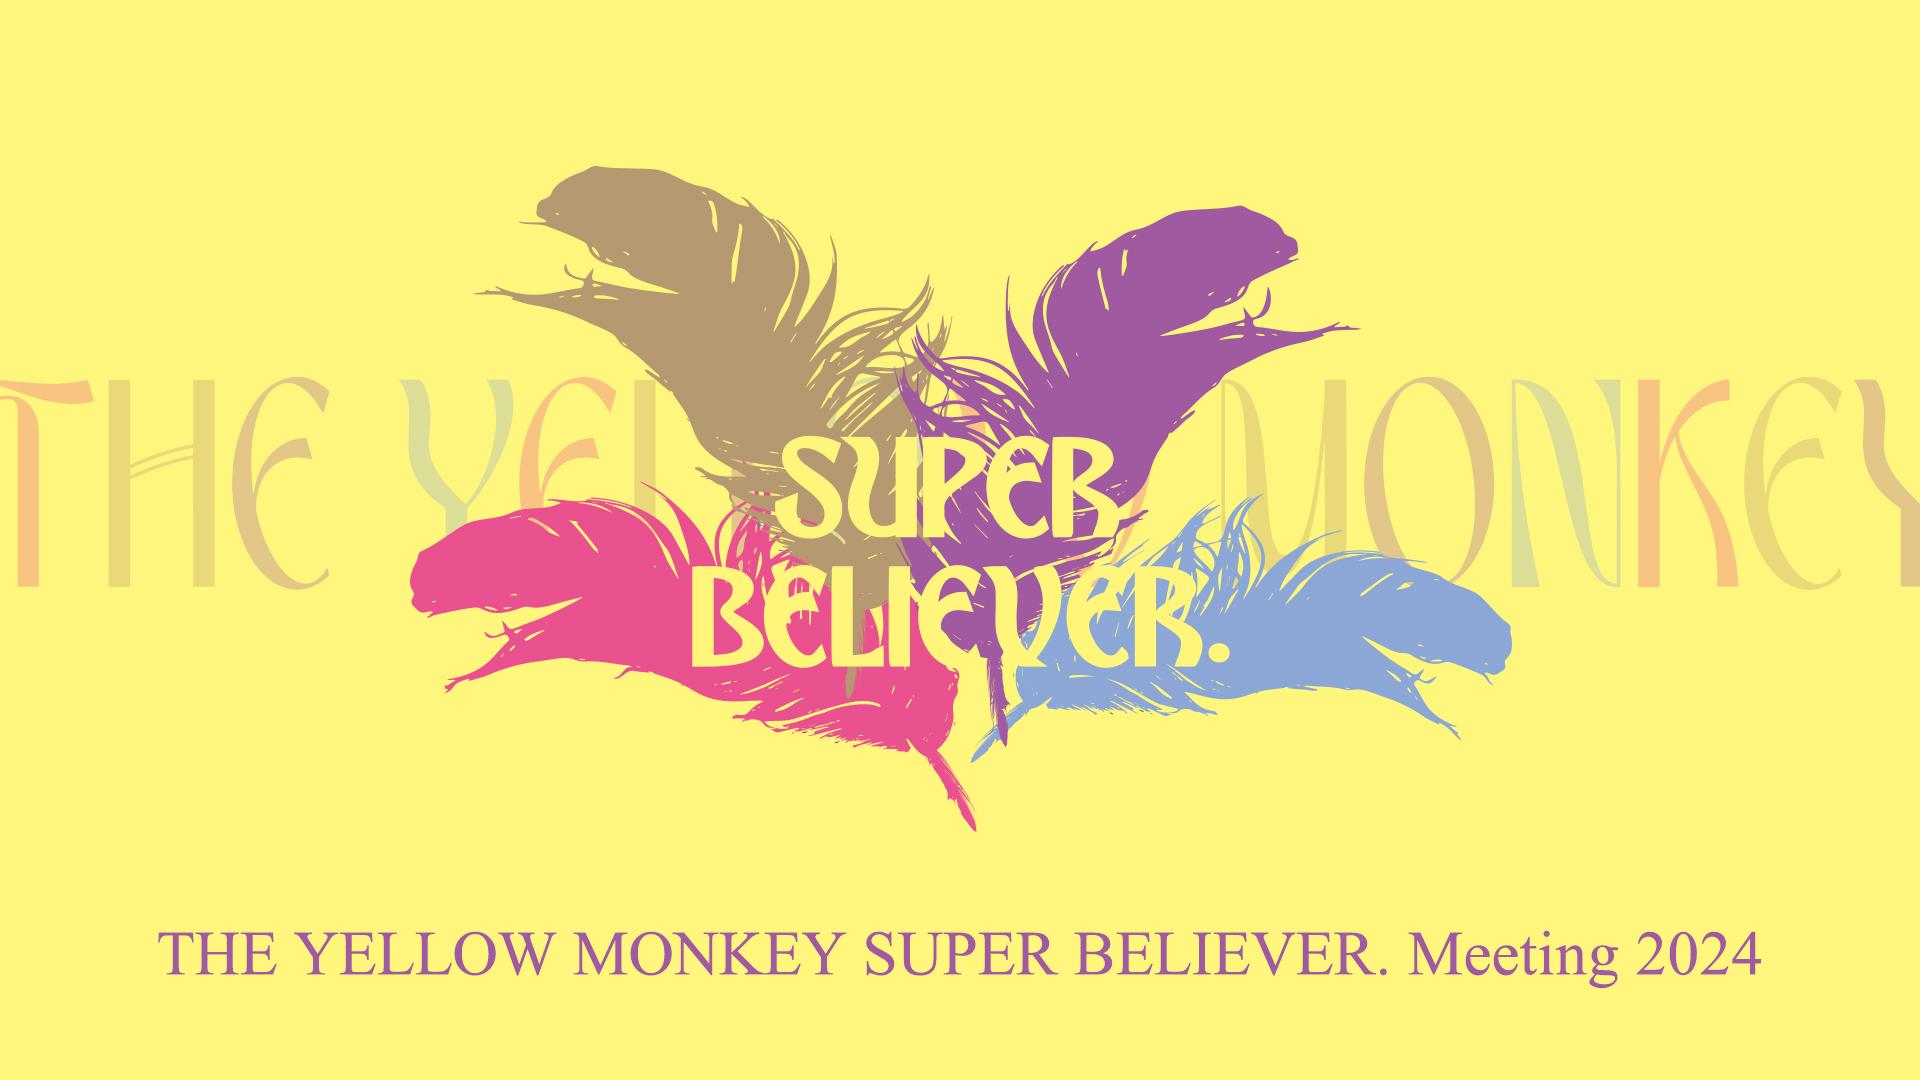 THE YELLOW MONKEY SUPER BELIEVER. Meeting 2024」特別企画が決定 